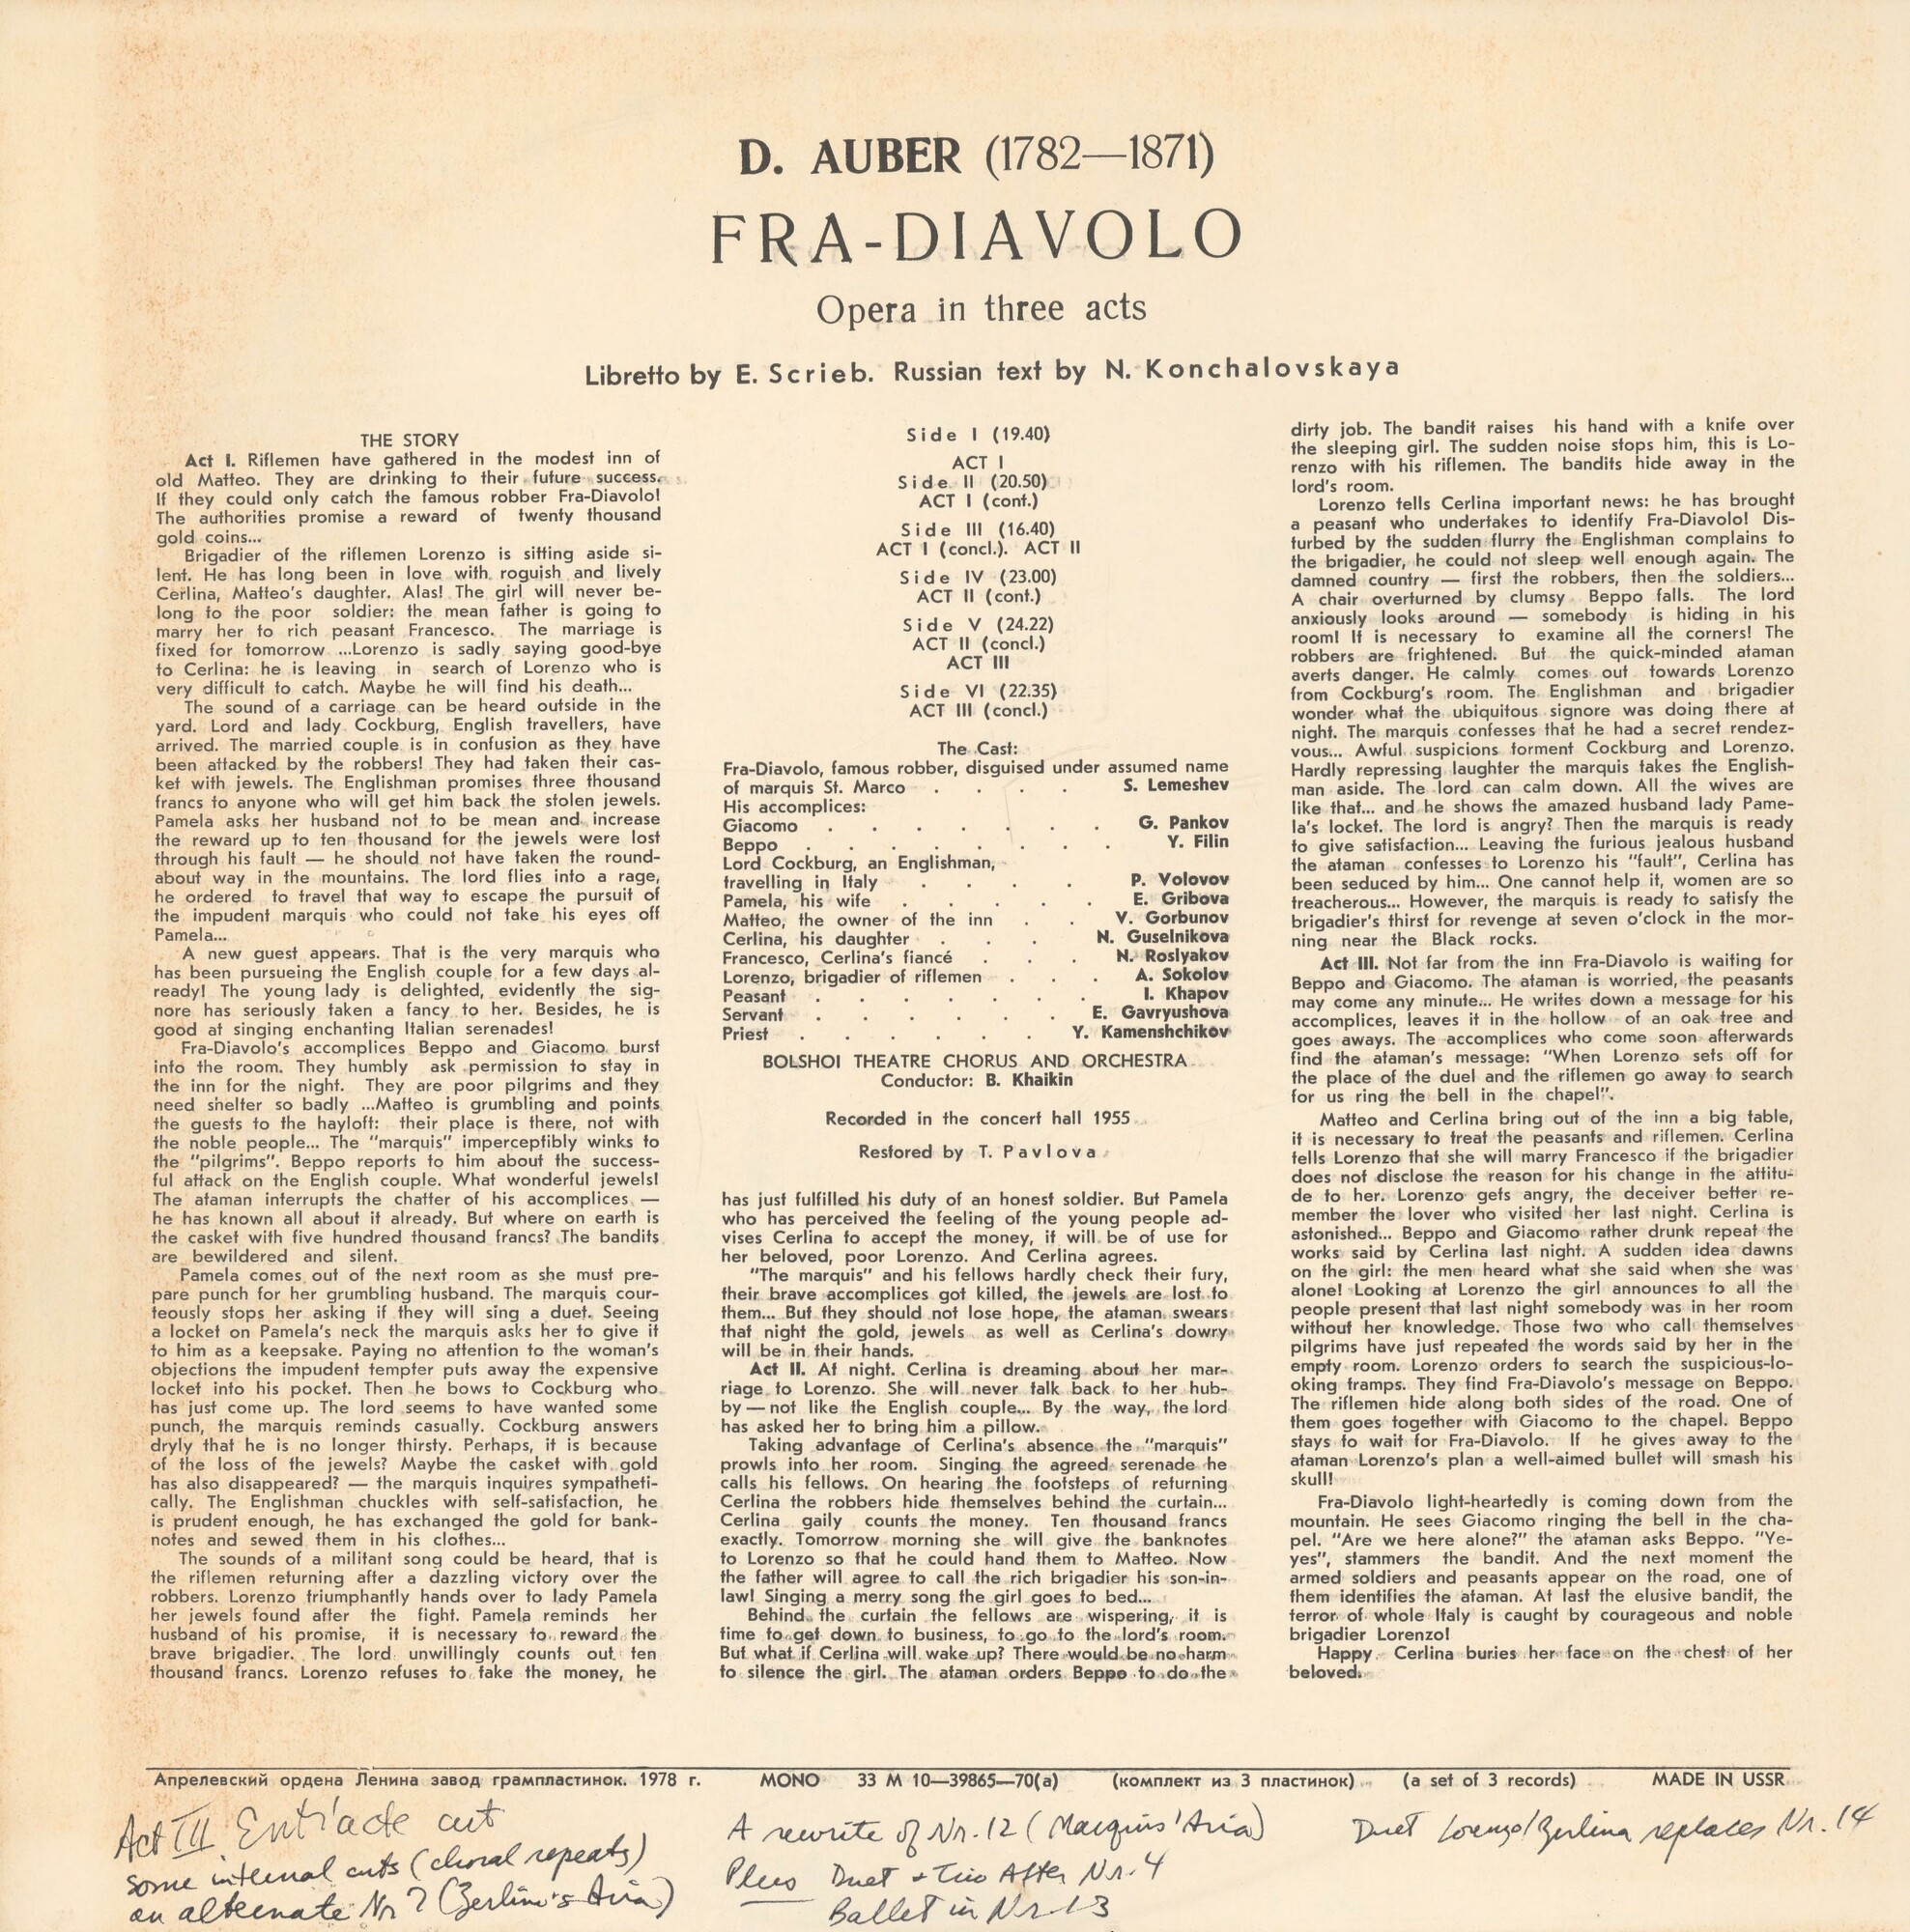 Д. ОБЕР (1782-1871): «Фра-Дьяволо», опера в трех действиях